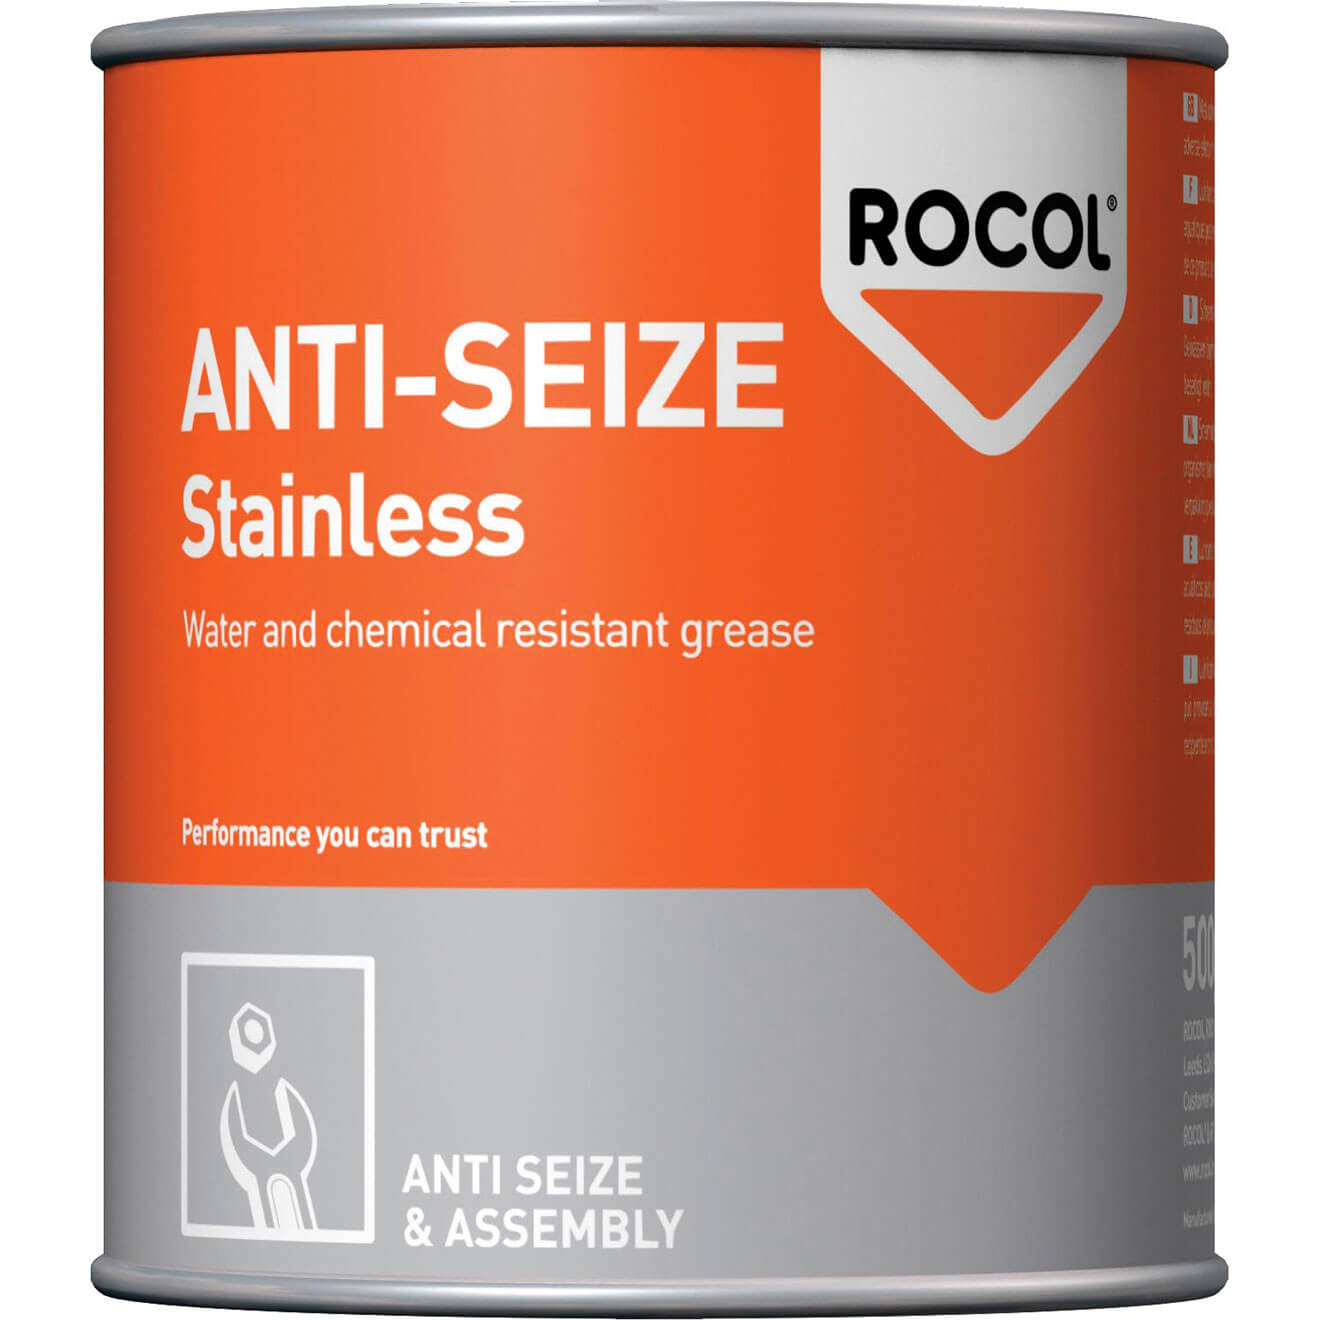 Rocol Anti-Seize Stainless 500G